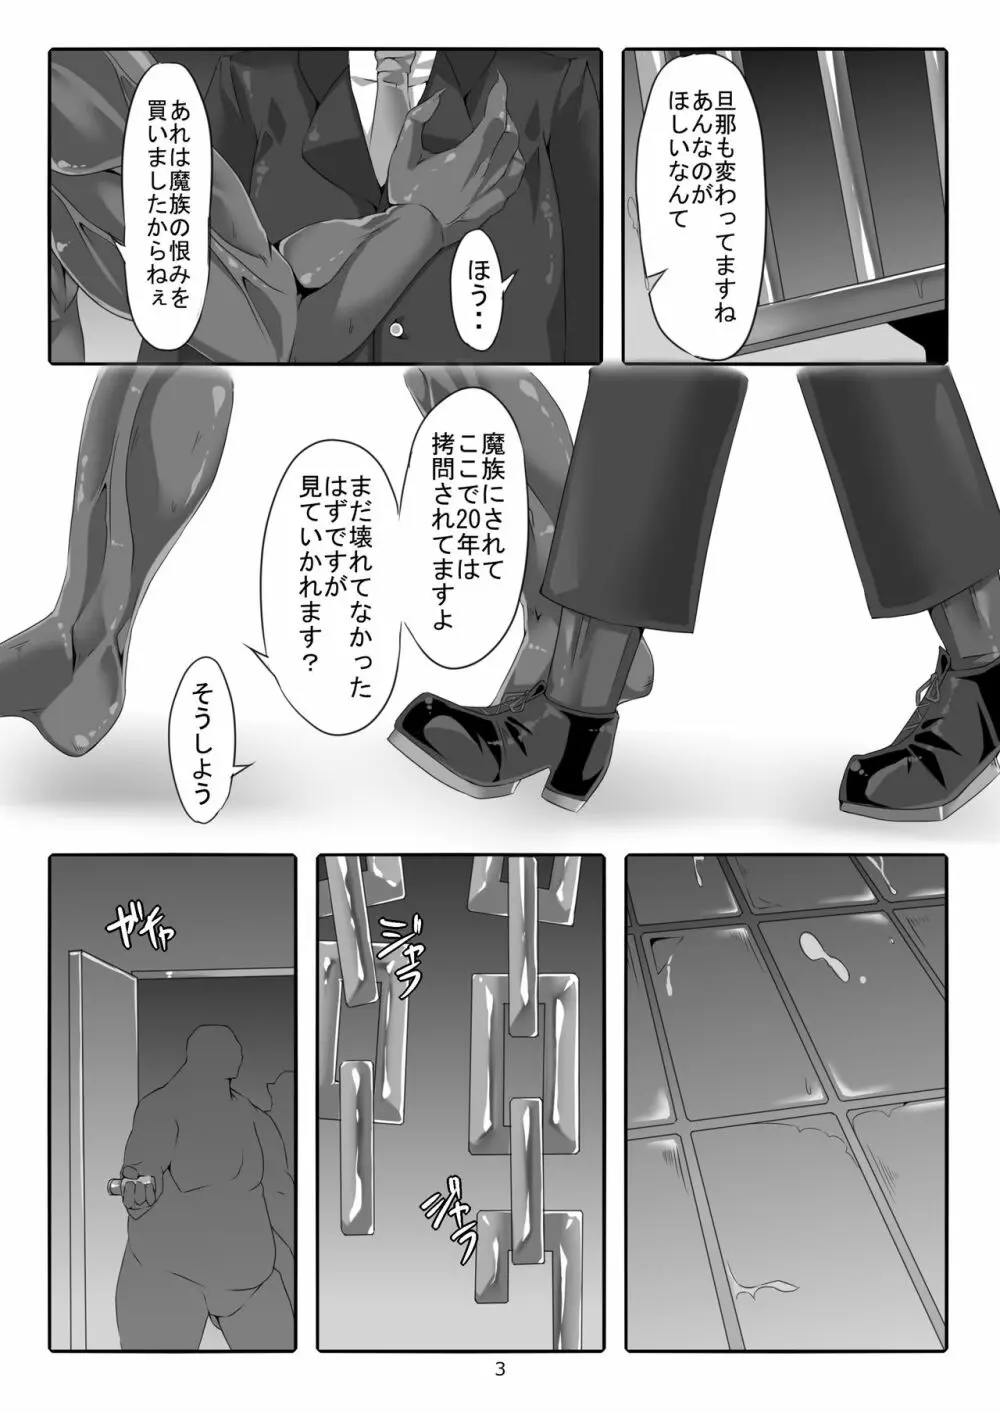 便器剣士ノ敗北録 - page4